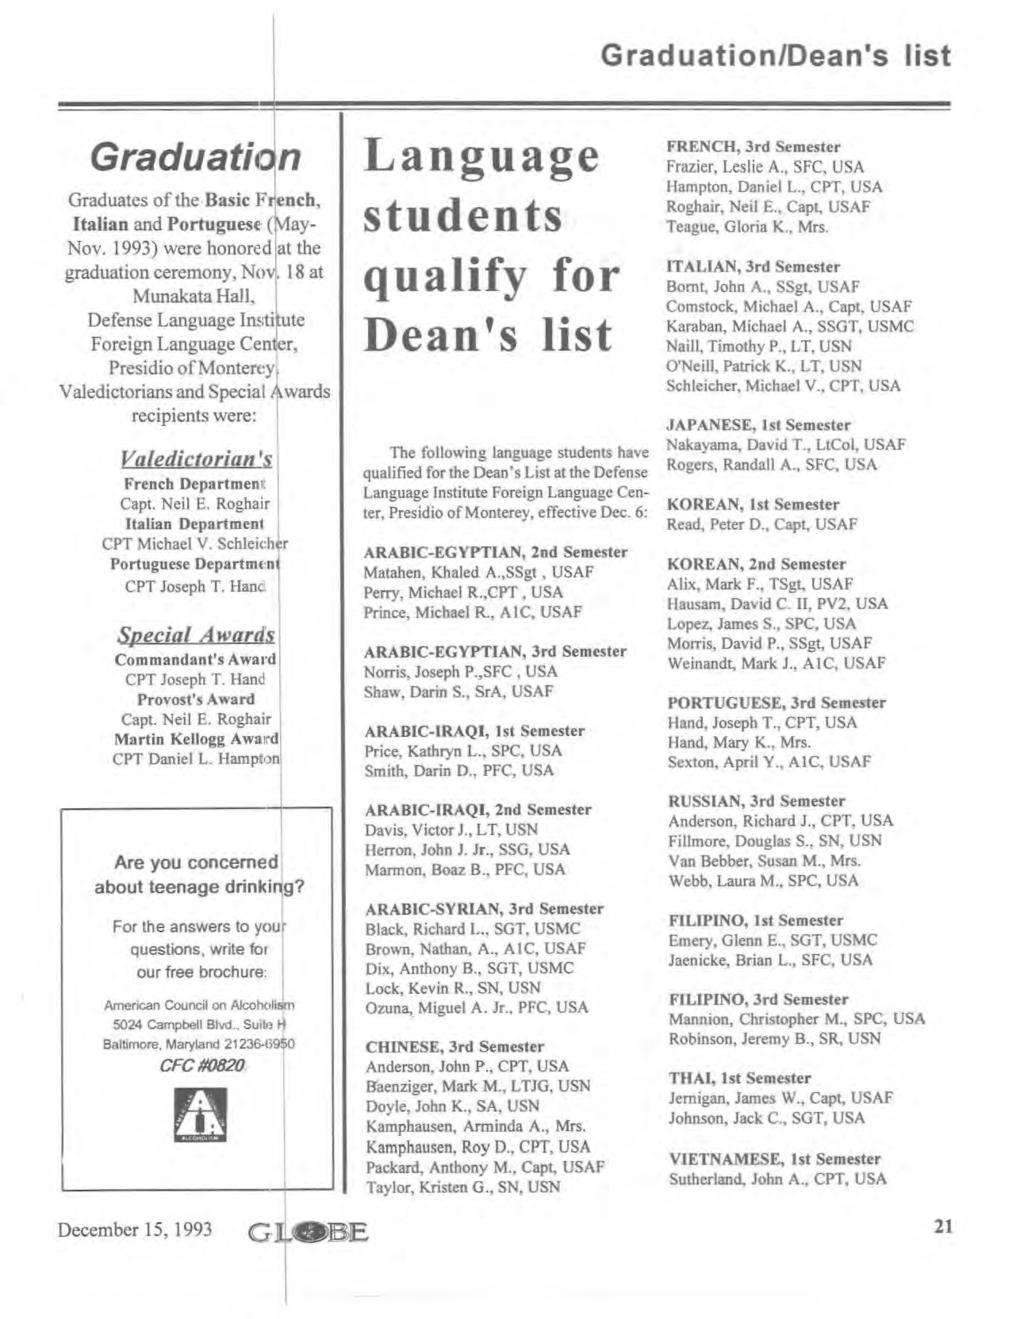 Graduation/Dean's list Graduatilc n Graduates of the Basic F lench, Italian and Portuguese- ~ay Nov.